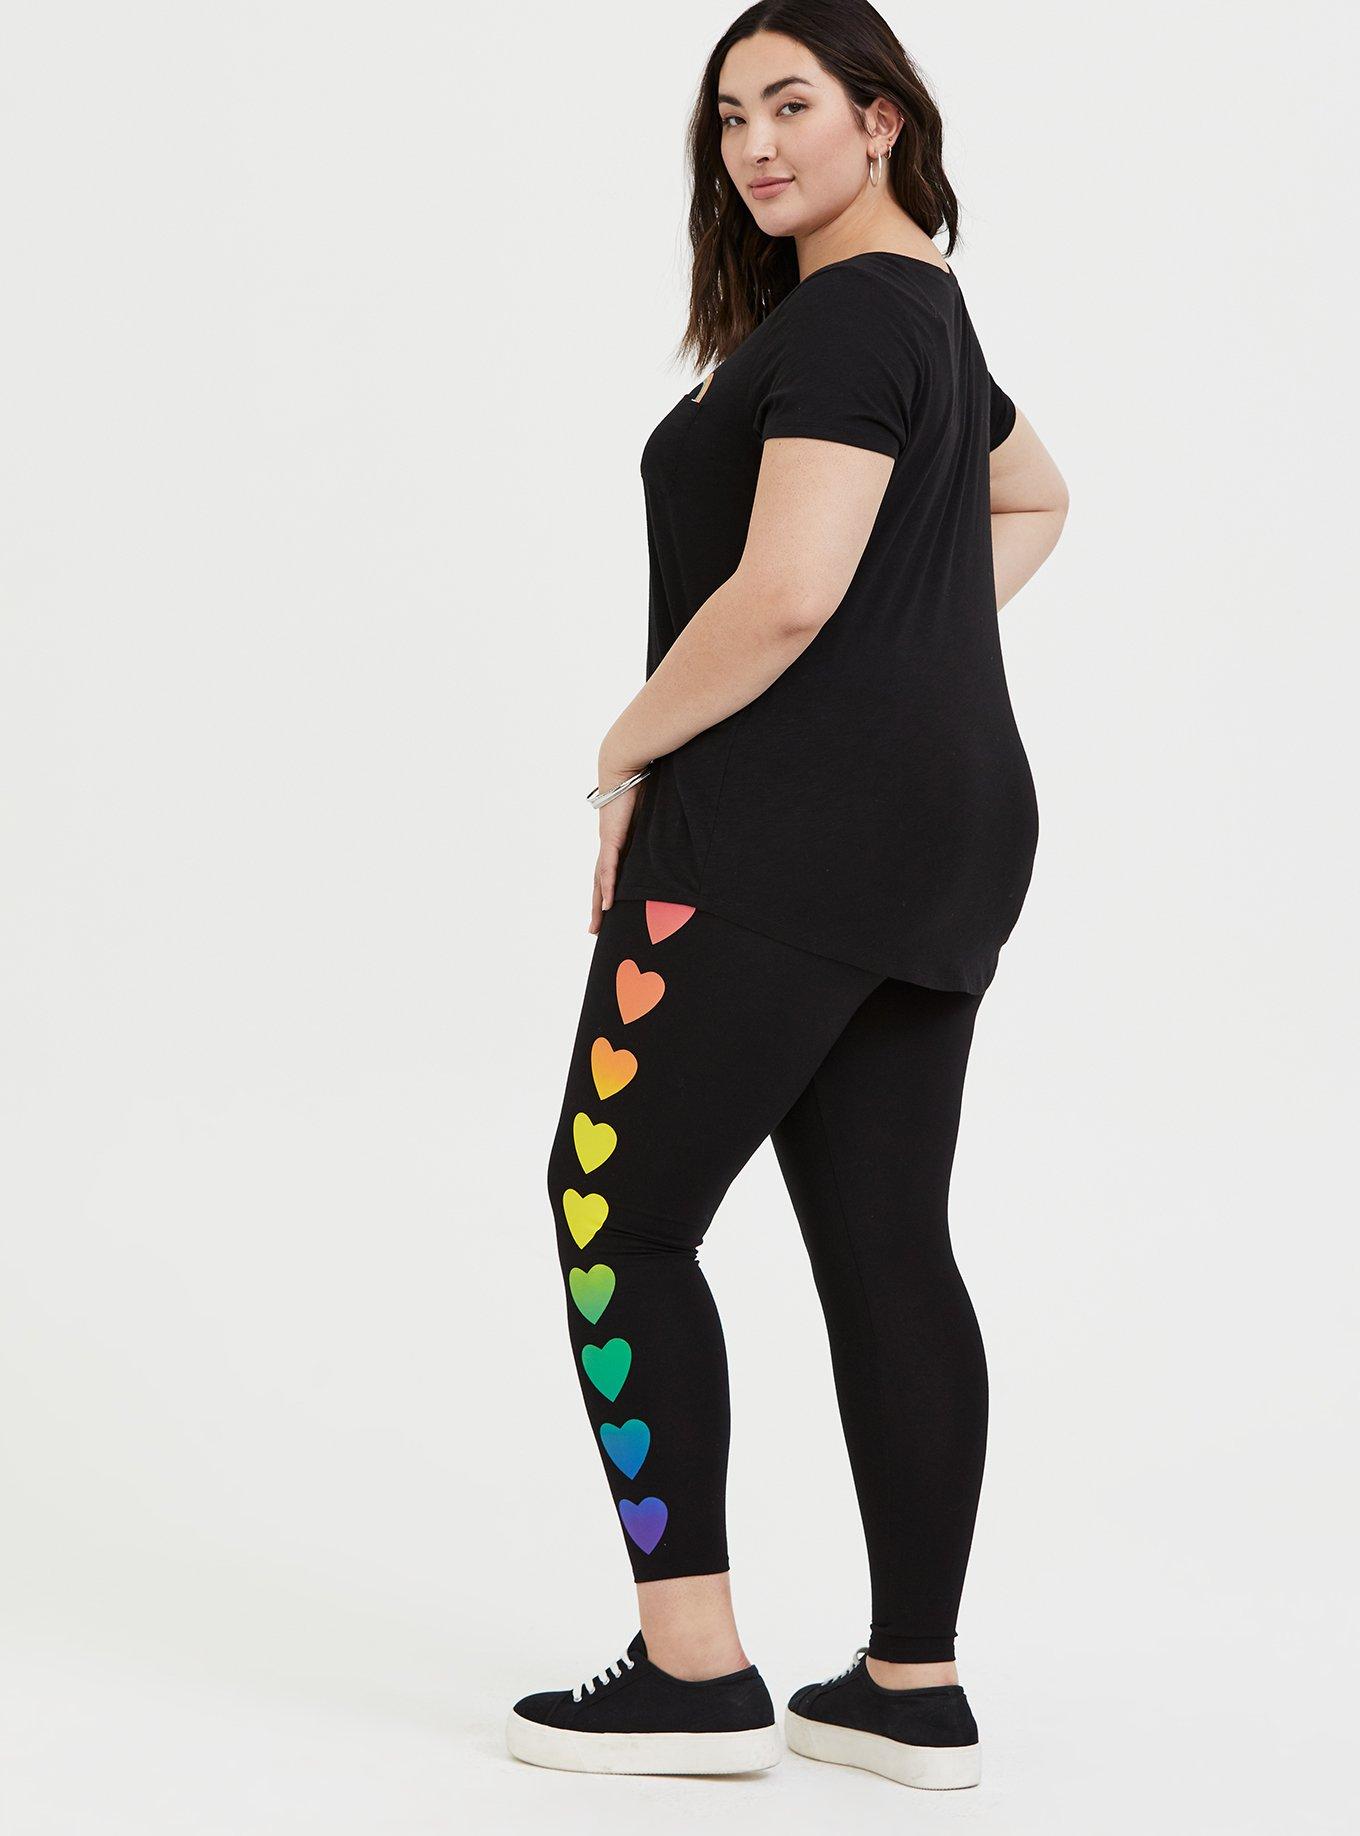 Rainbow at Heart Maternity Black Legging - 7/8 Length